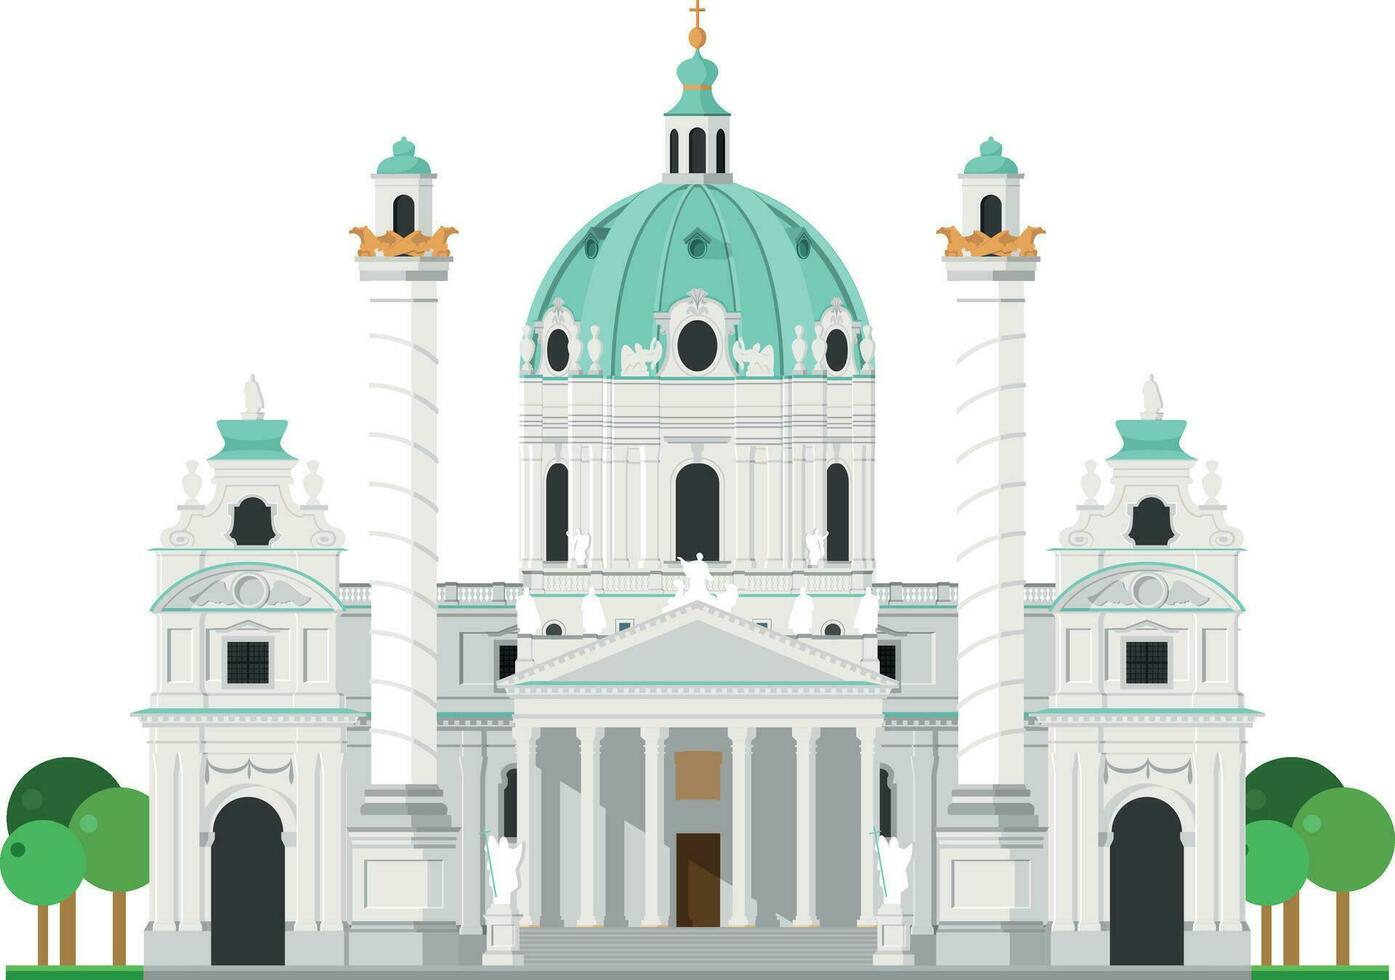 st. charles kyrka, Wien, Österrike. isolerat på vit bakgrund vektor illustration.